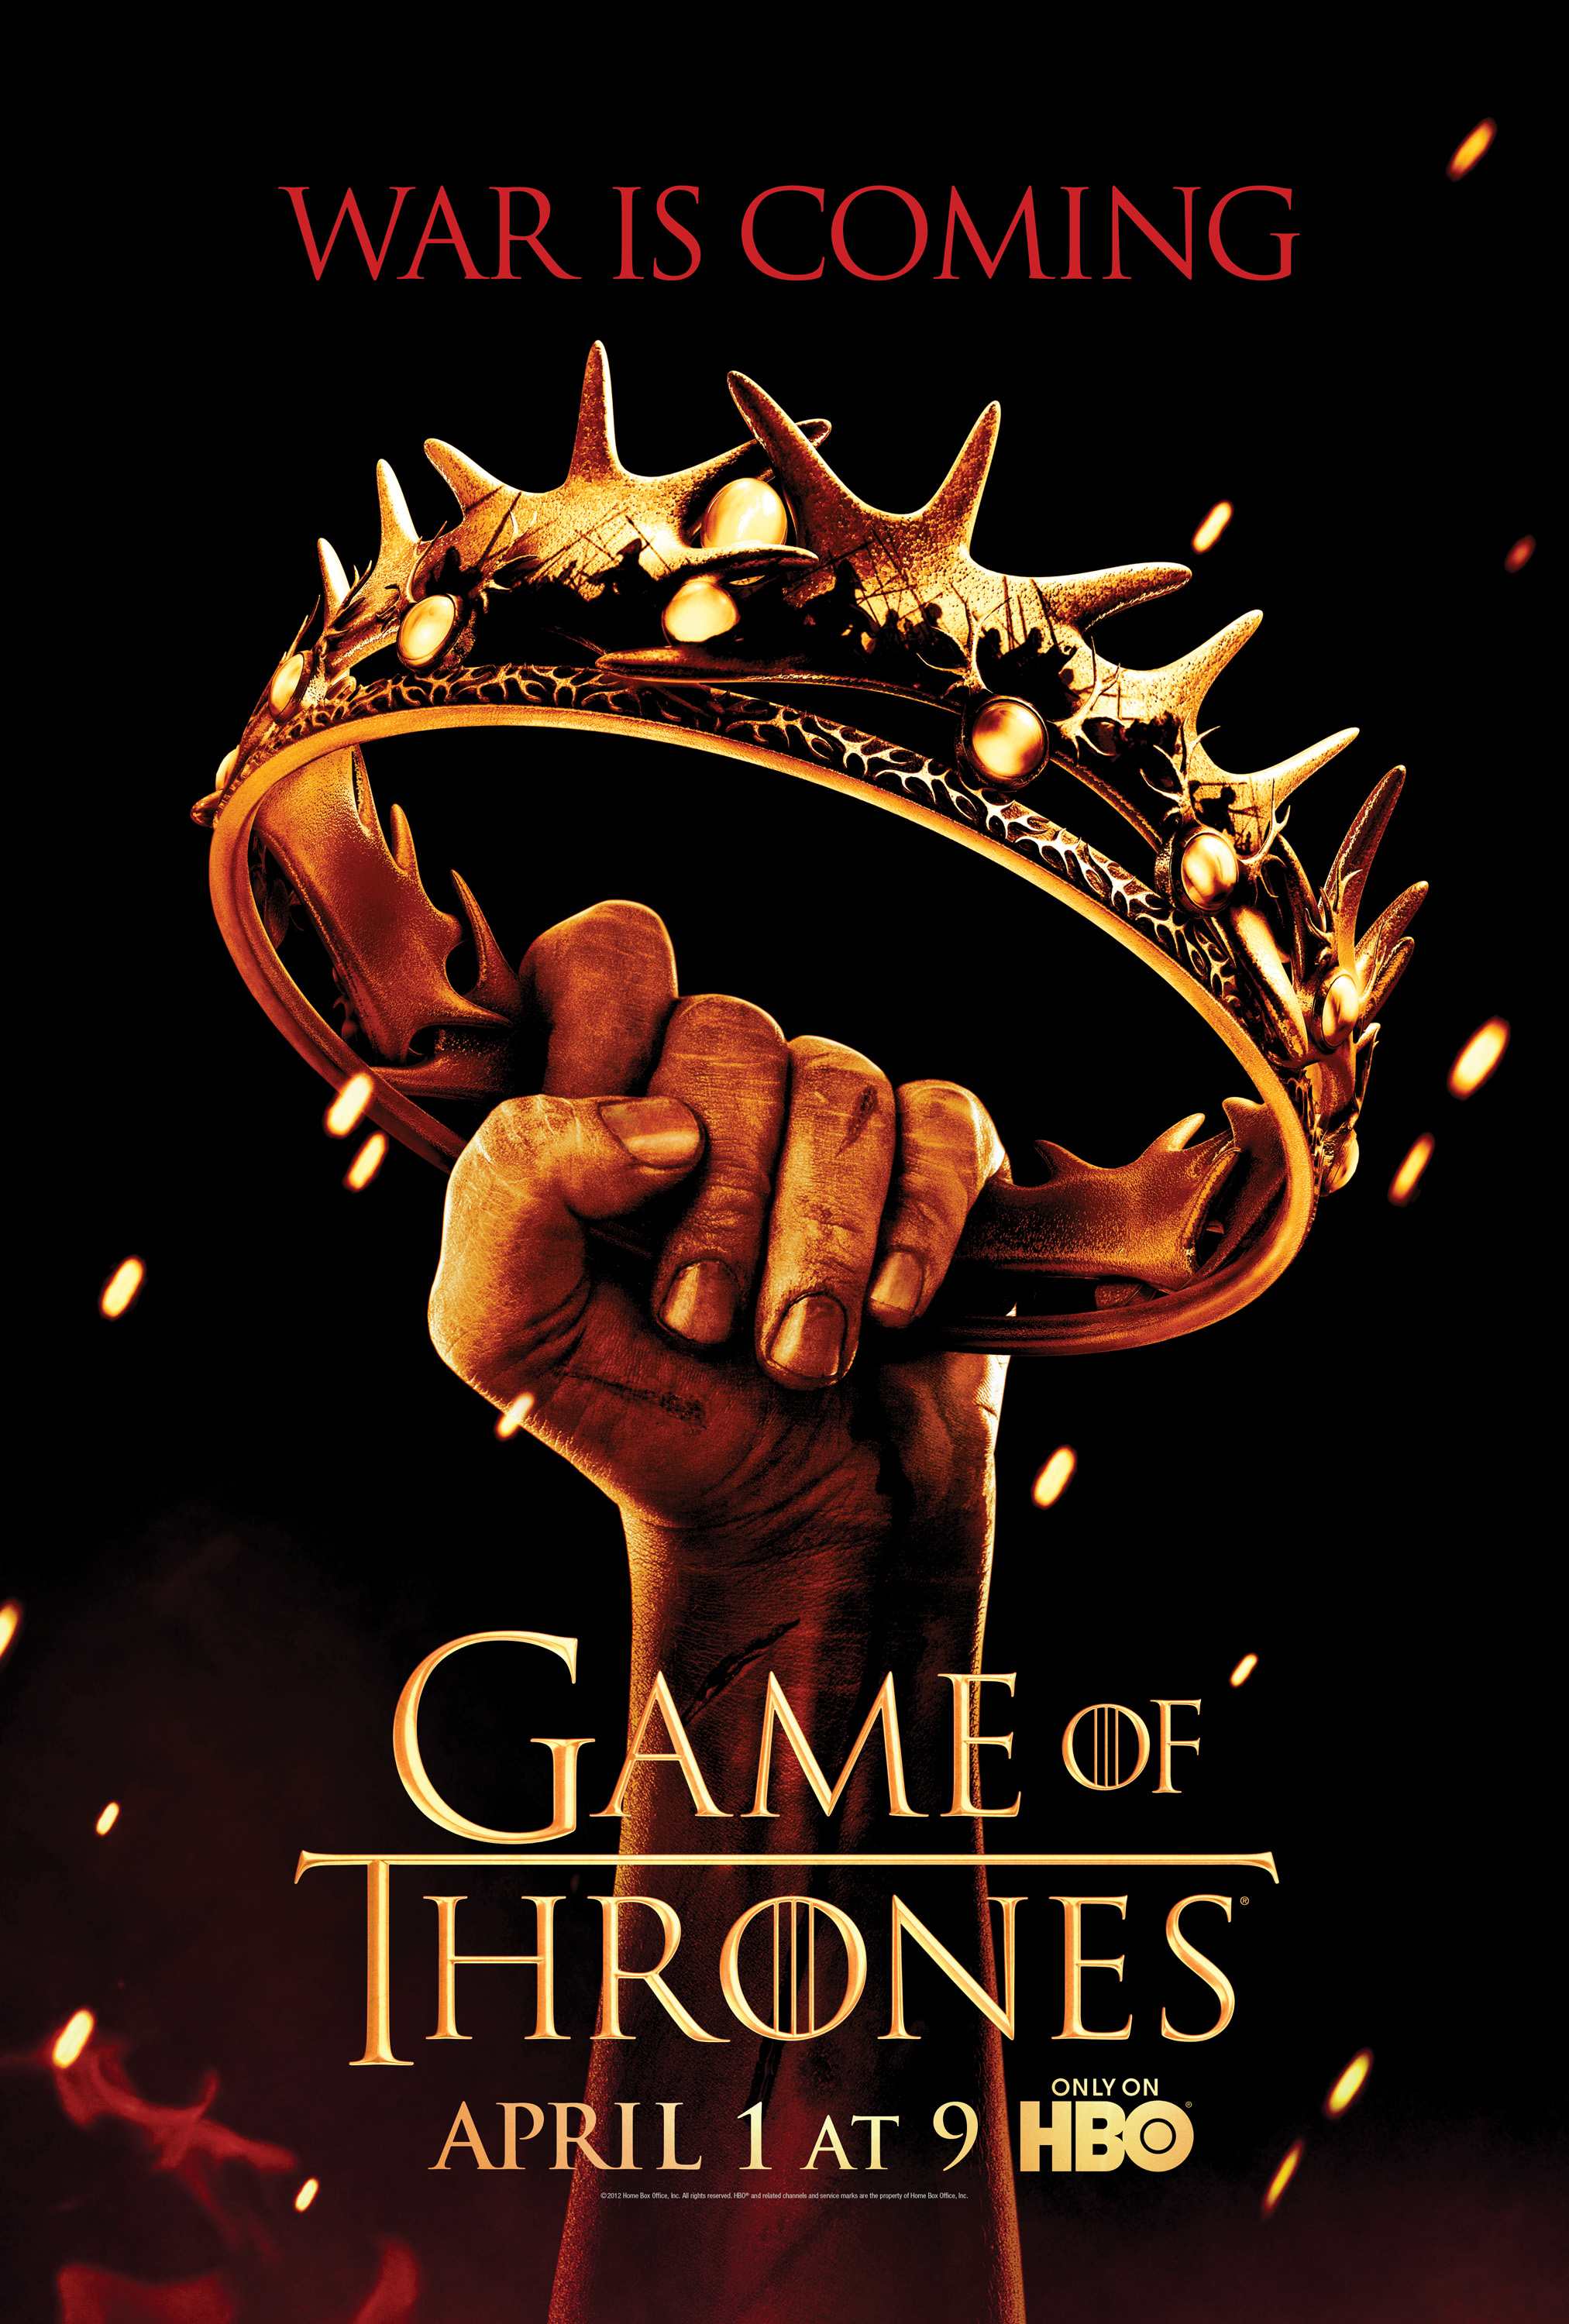 Game_of_Thrones_War_is_Coming.jpg